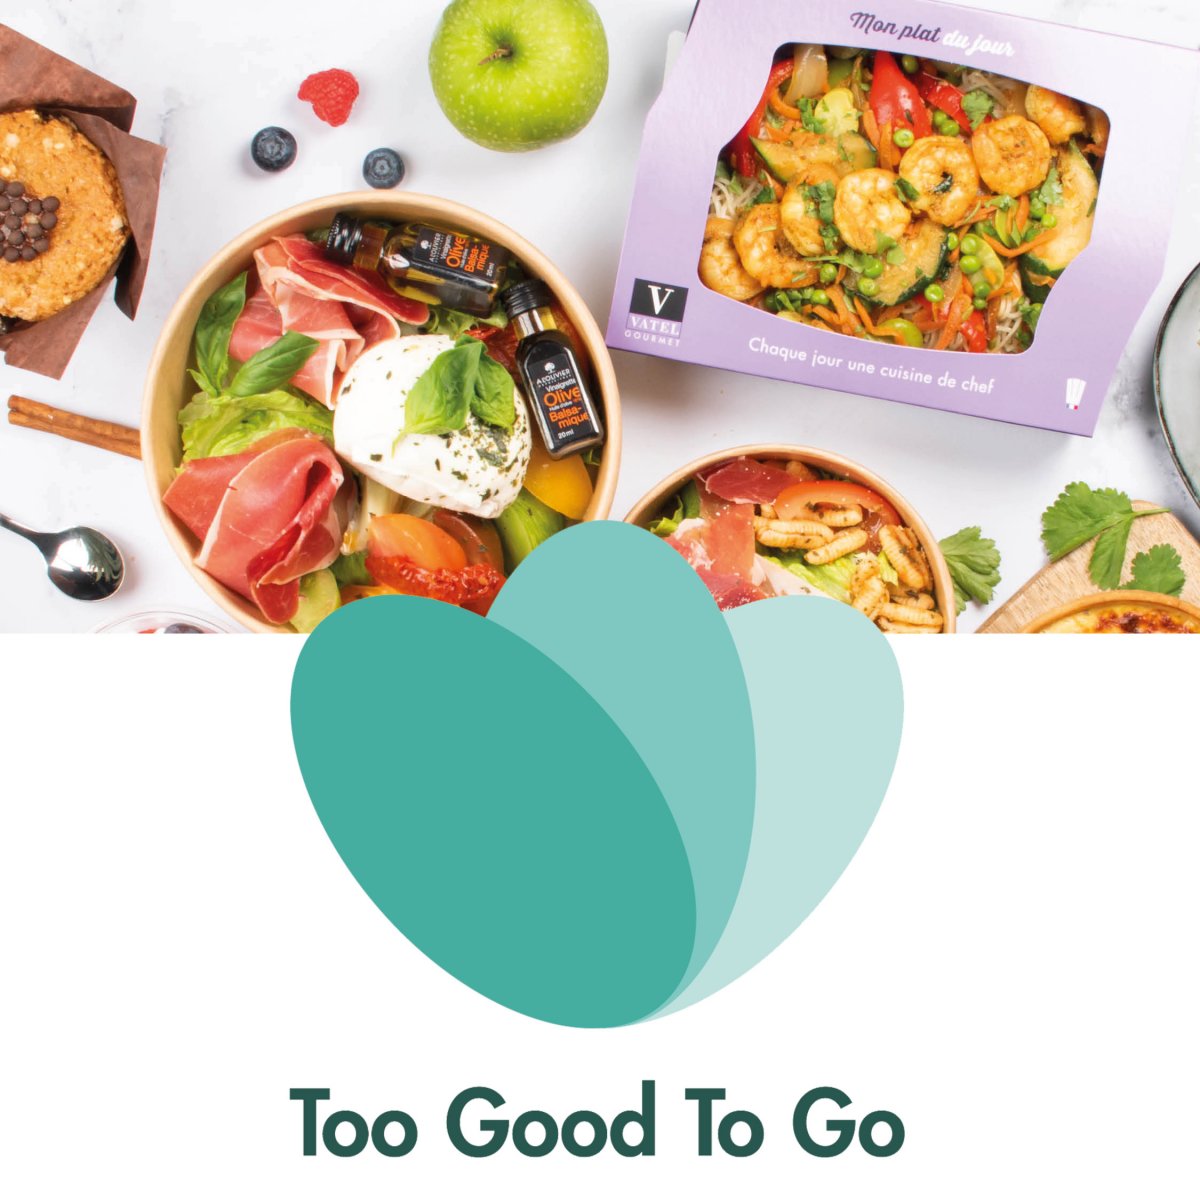 Notre partenariat avec Too Good To Go - Vatel Gourmet